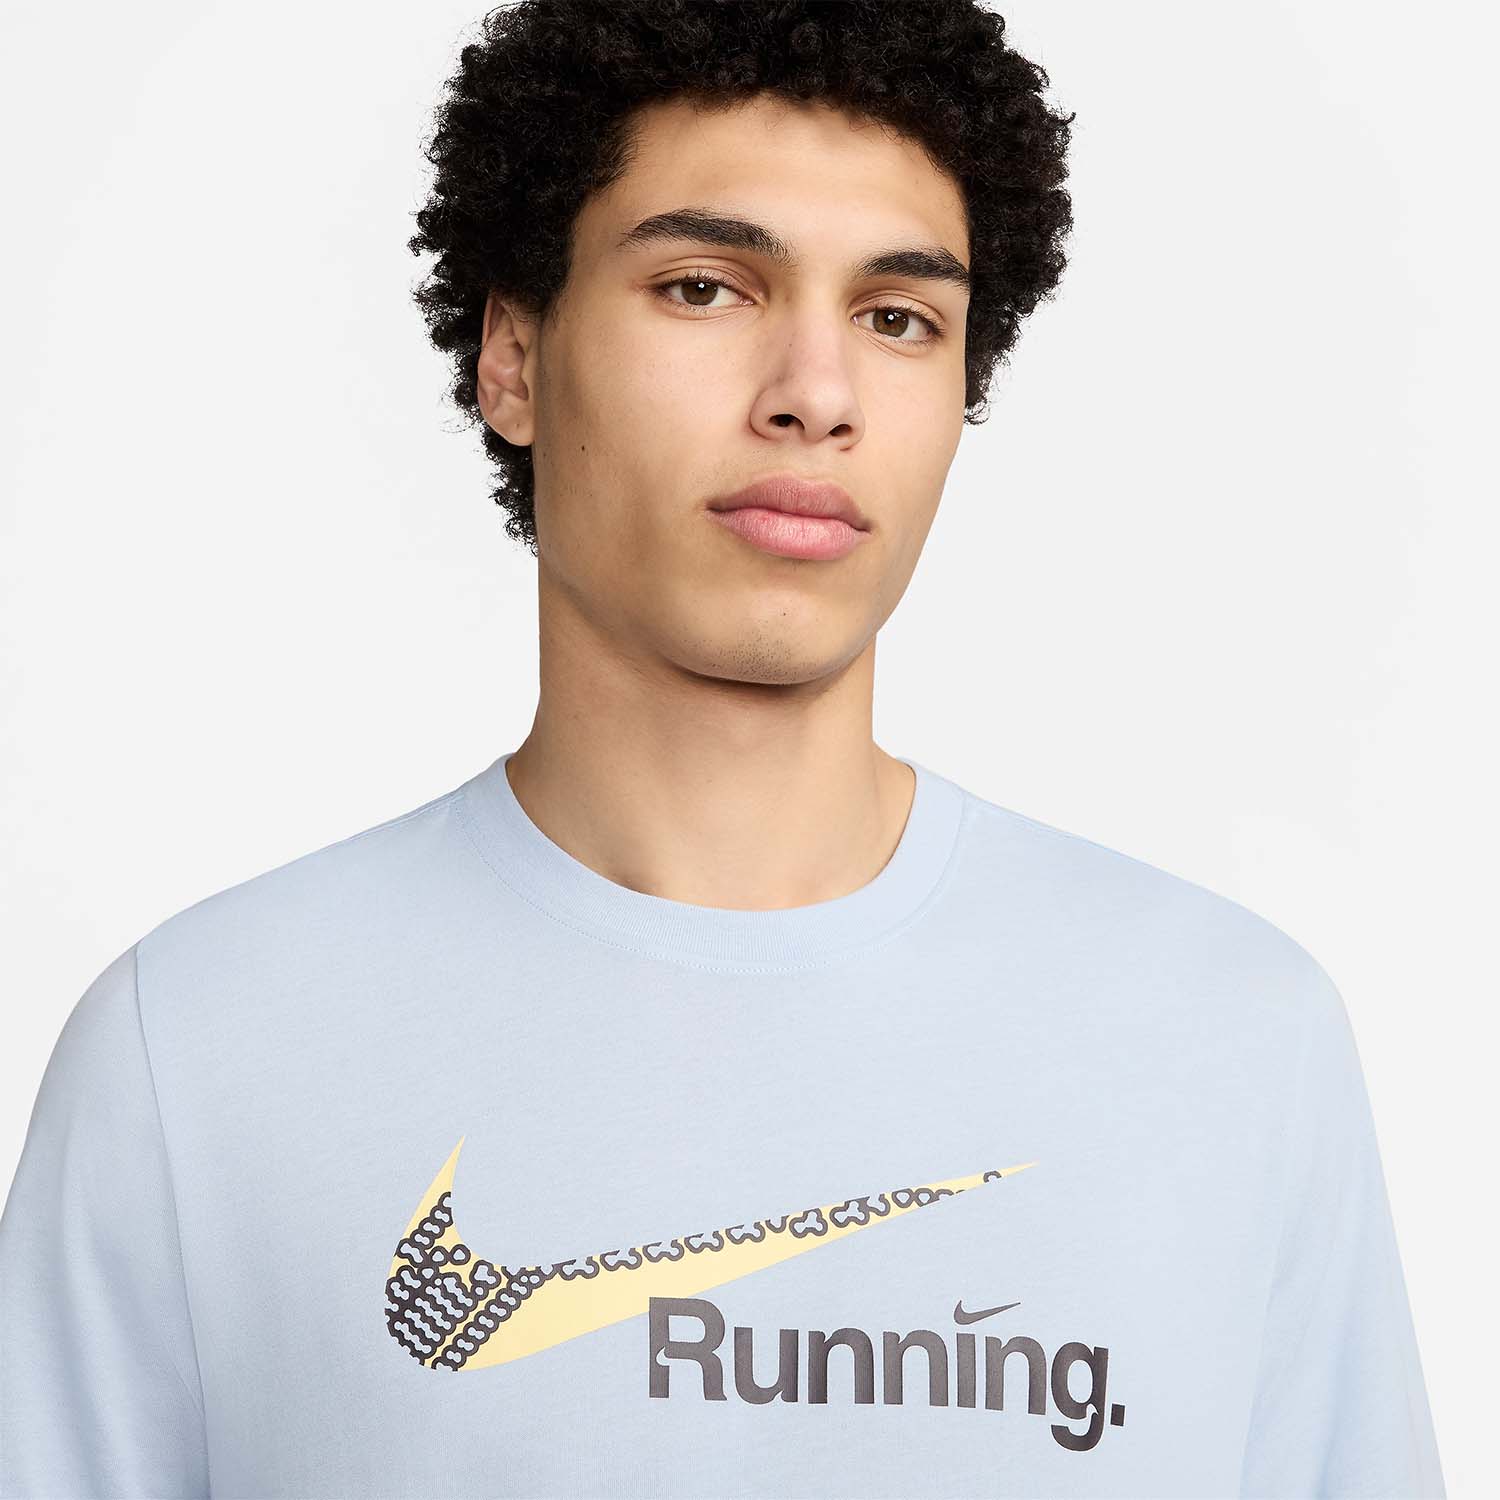 Nike Dri-FIT Swoosh Camiseta - Light Armony Blue